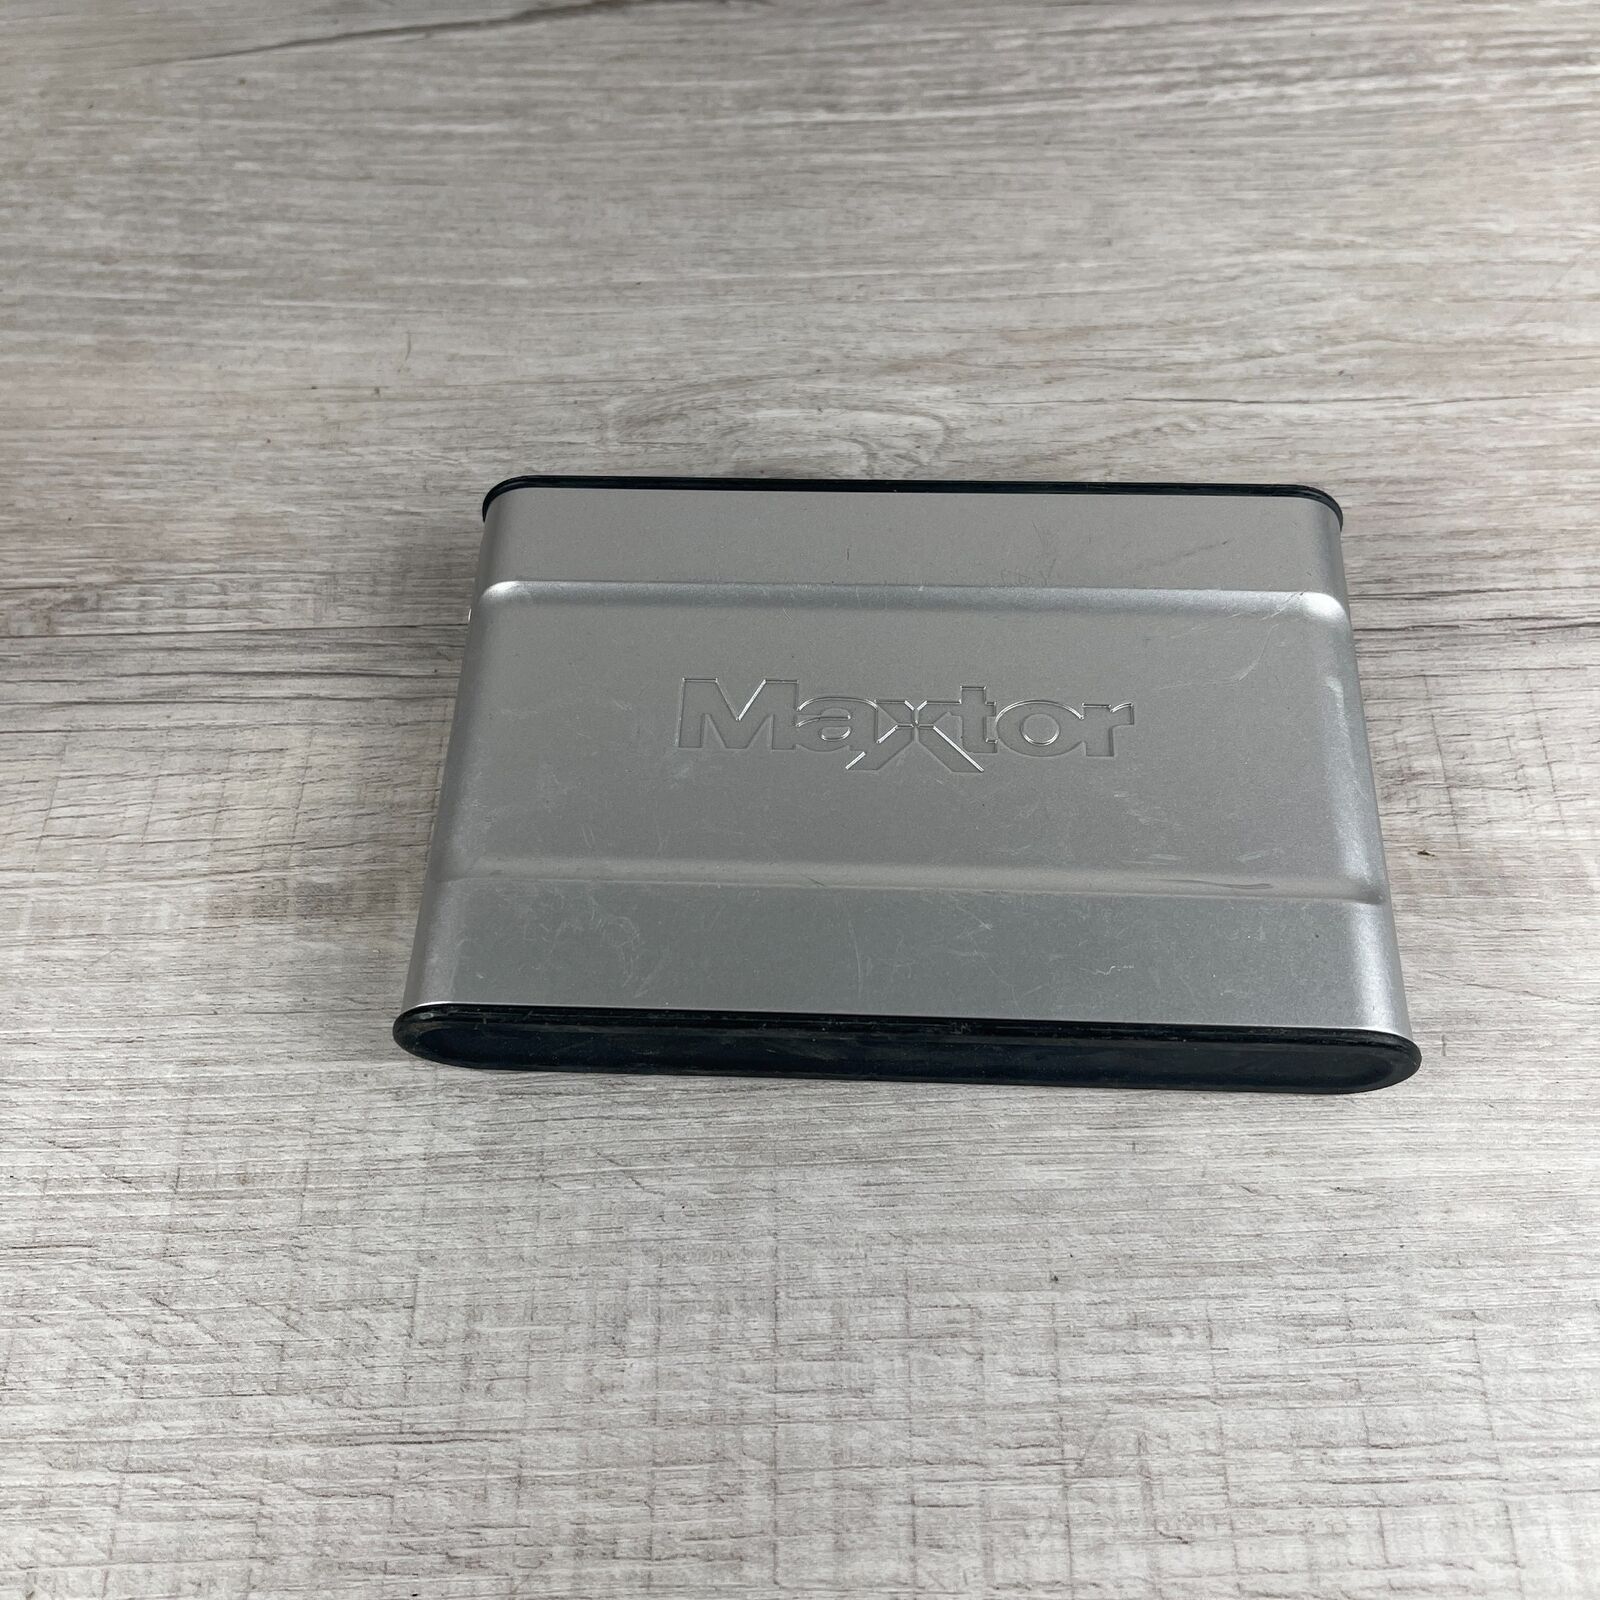 Maxtor OneTouch III Mini Silver Portable 160GB USB 2.0 External Hard Drive